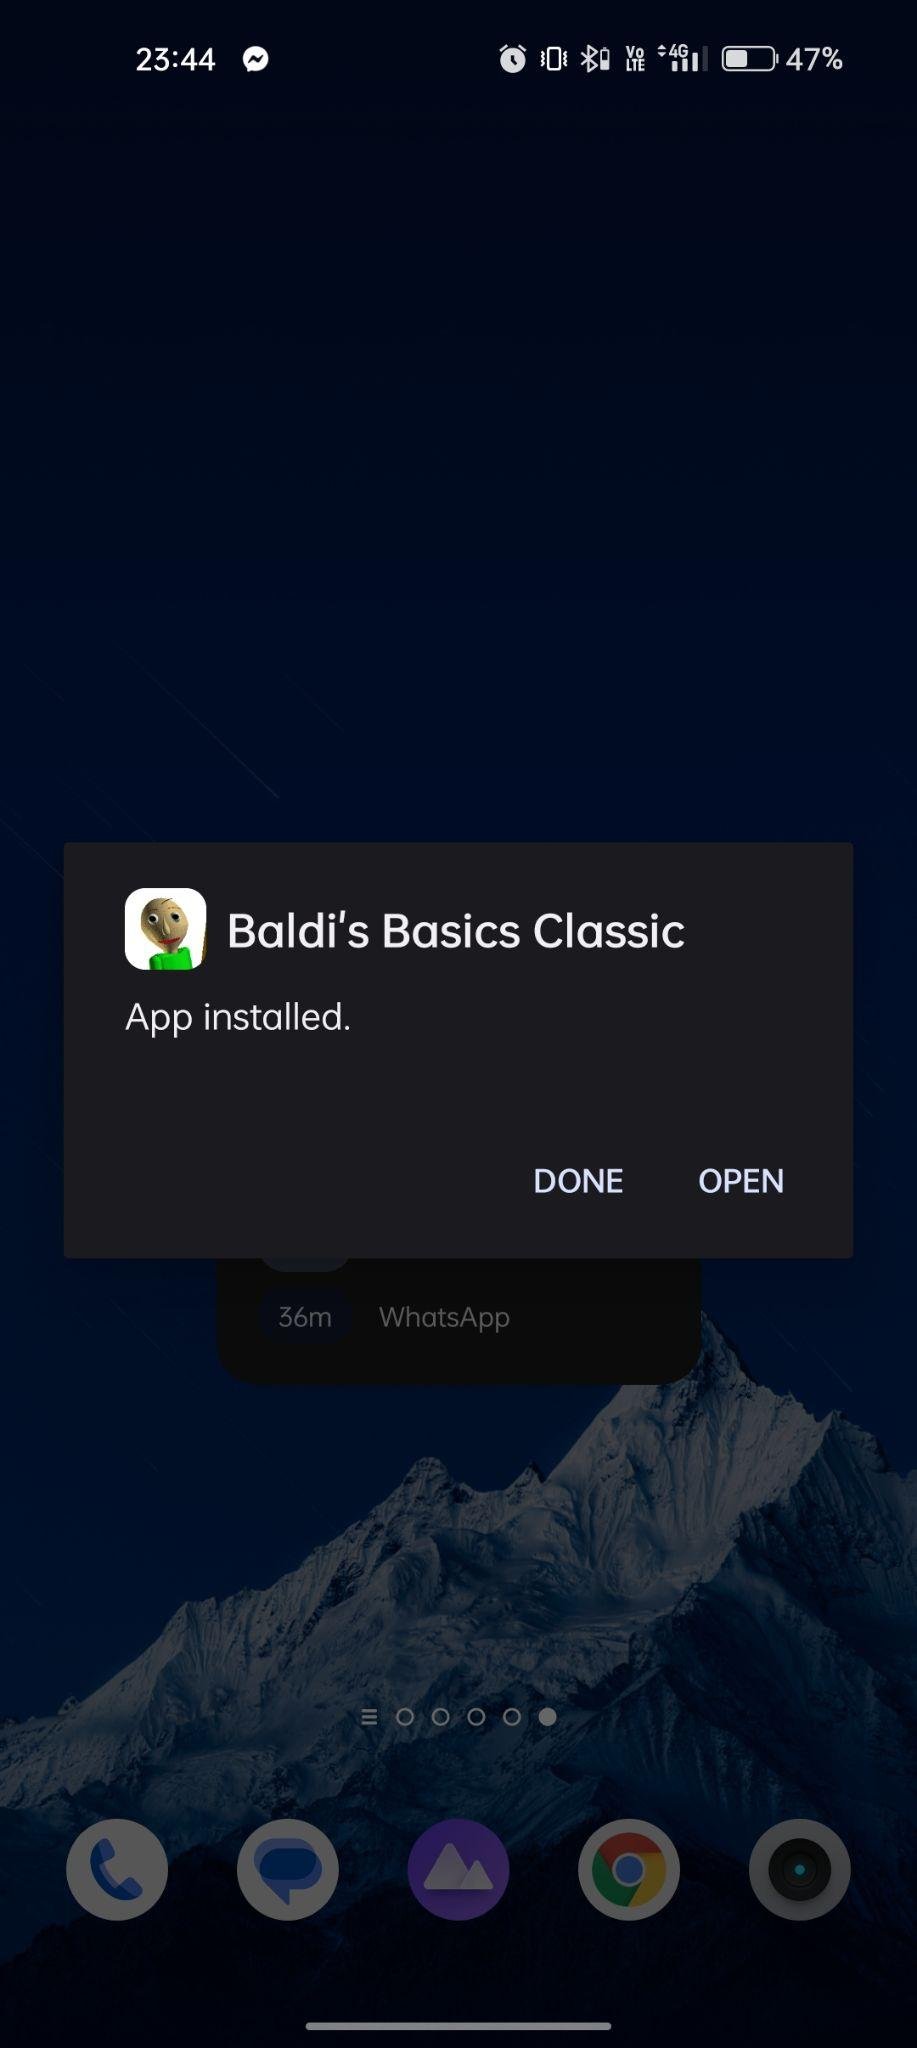 Baldi's Basics mod apk installed